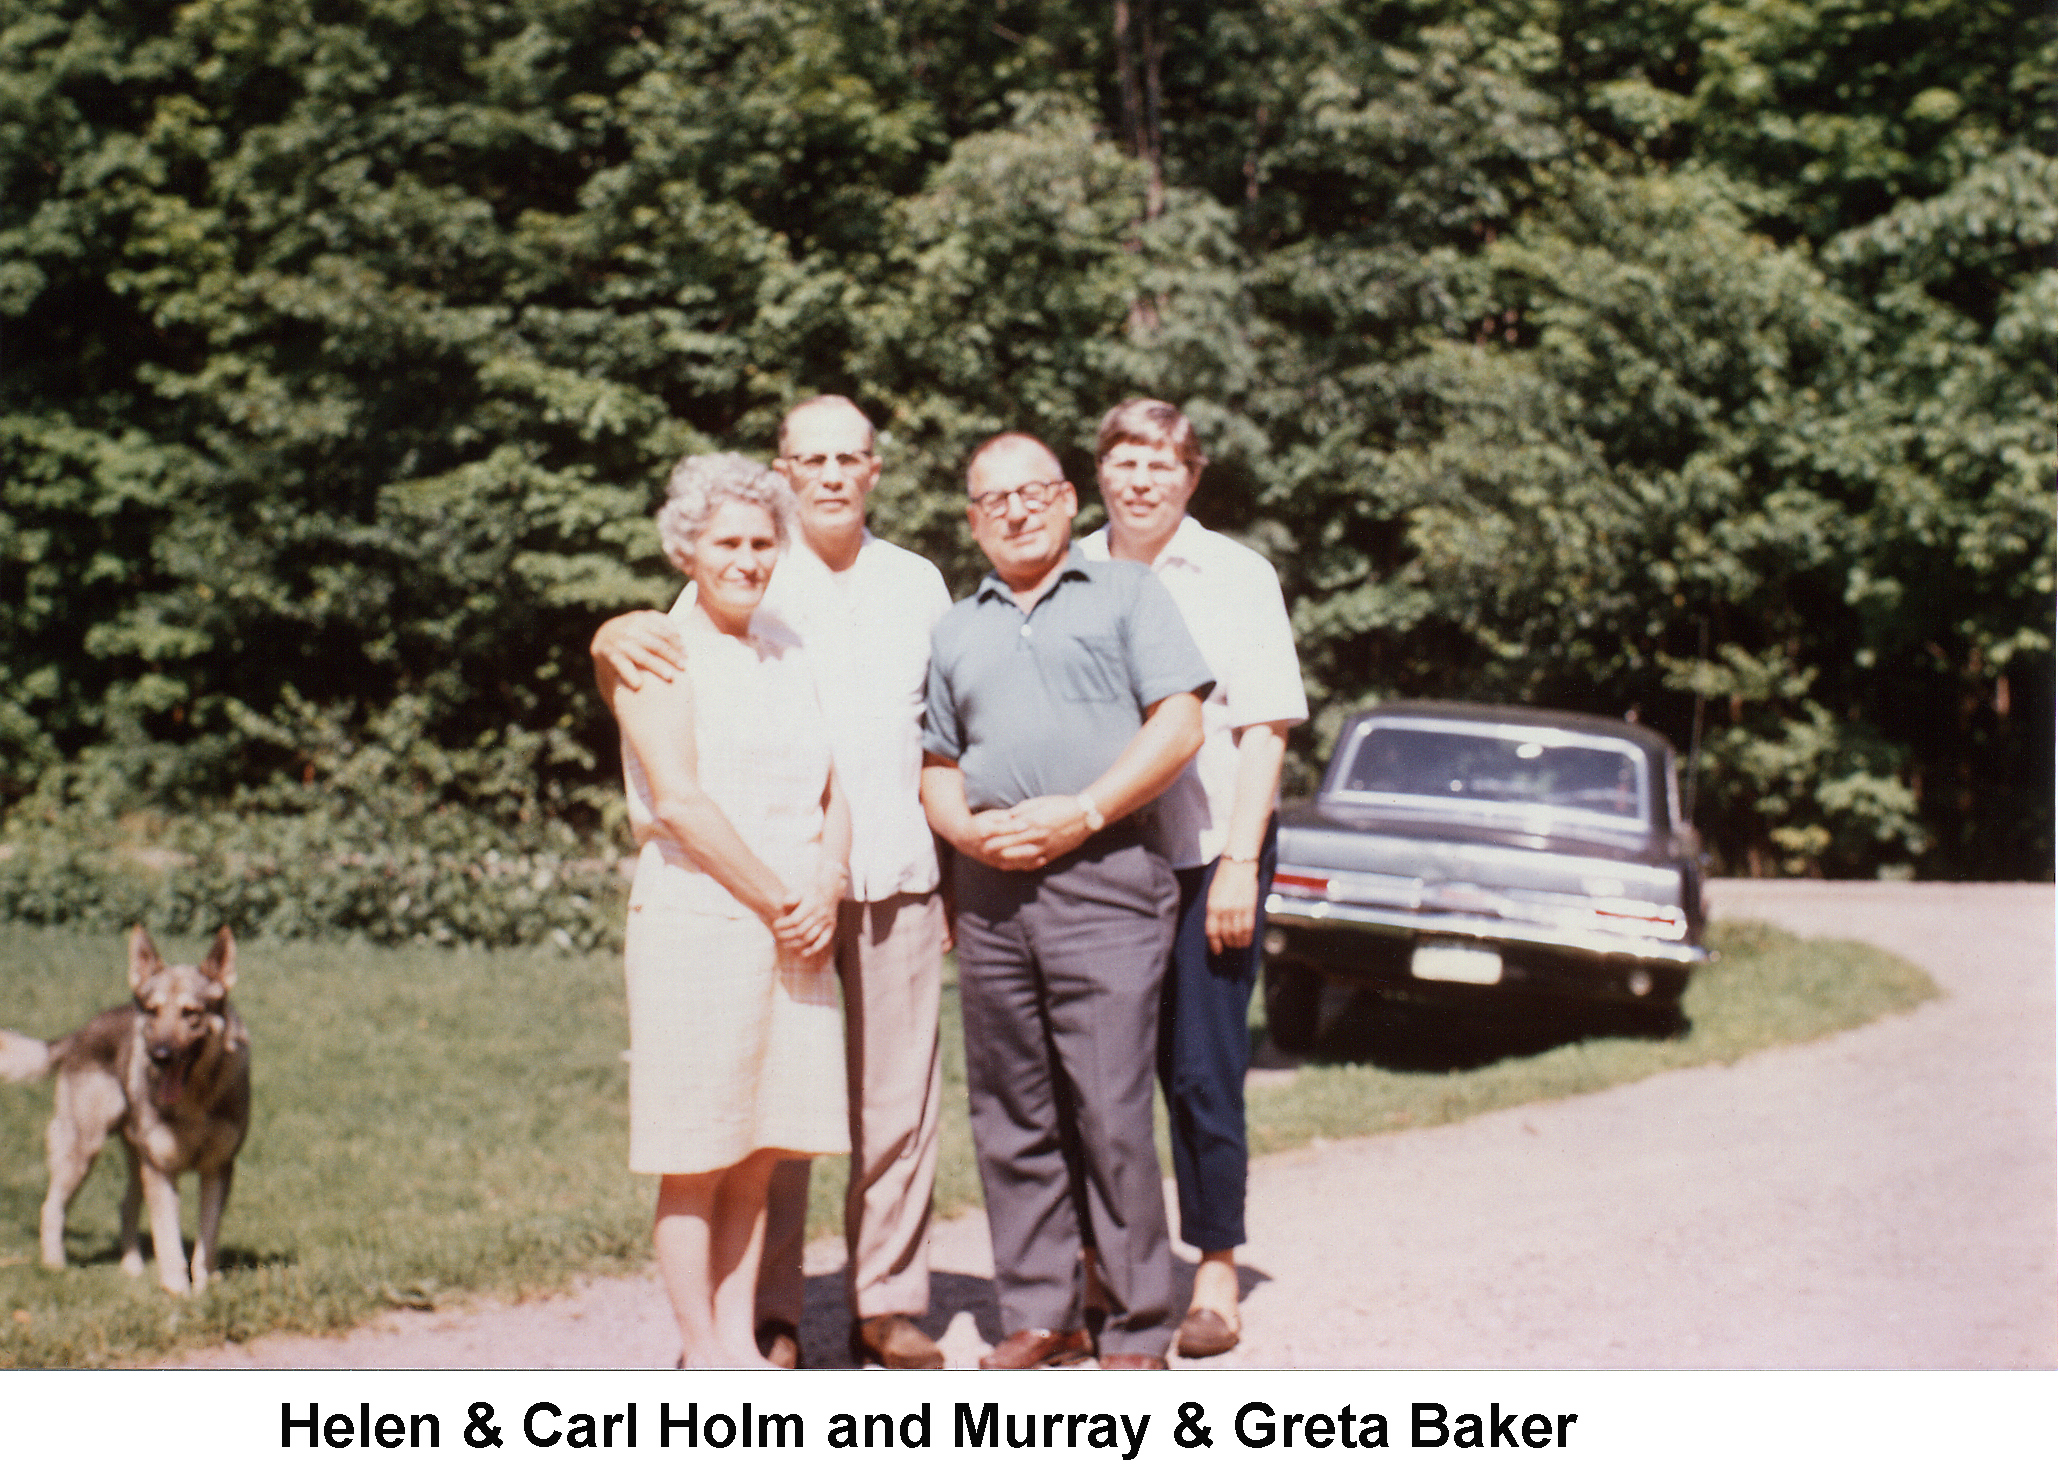 Carl & Helen Holm and Murray & Greta Baker